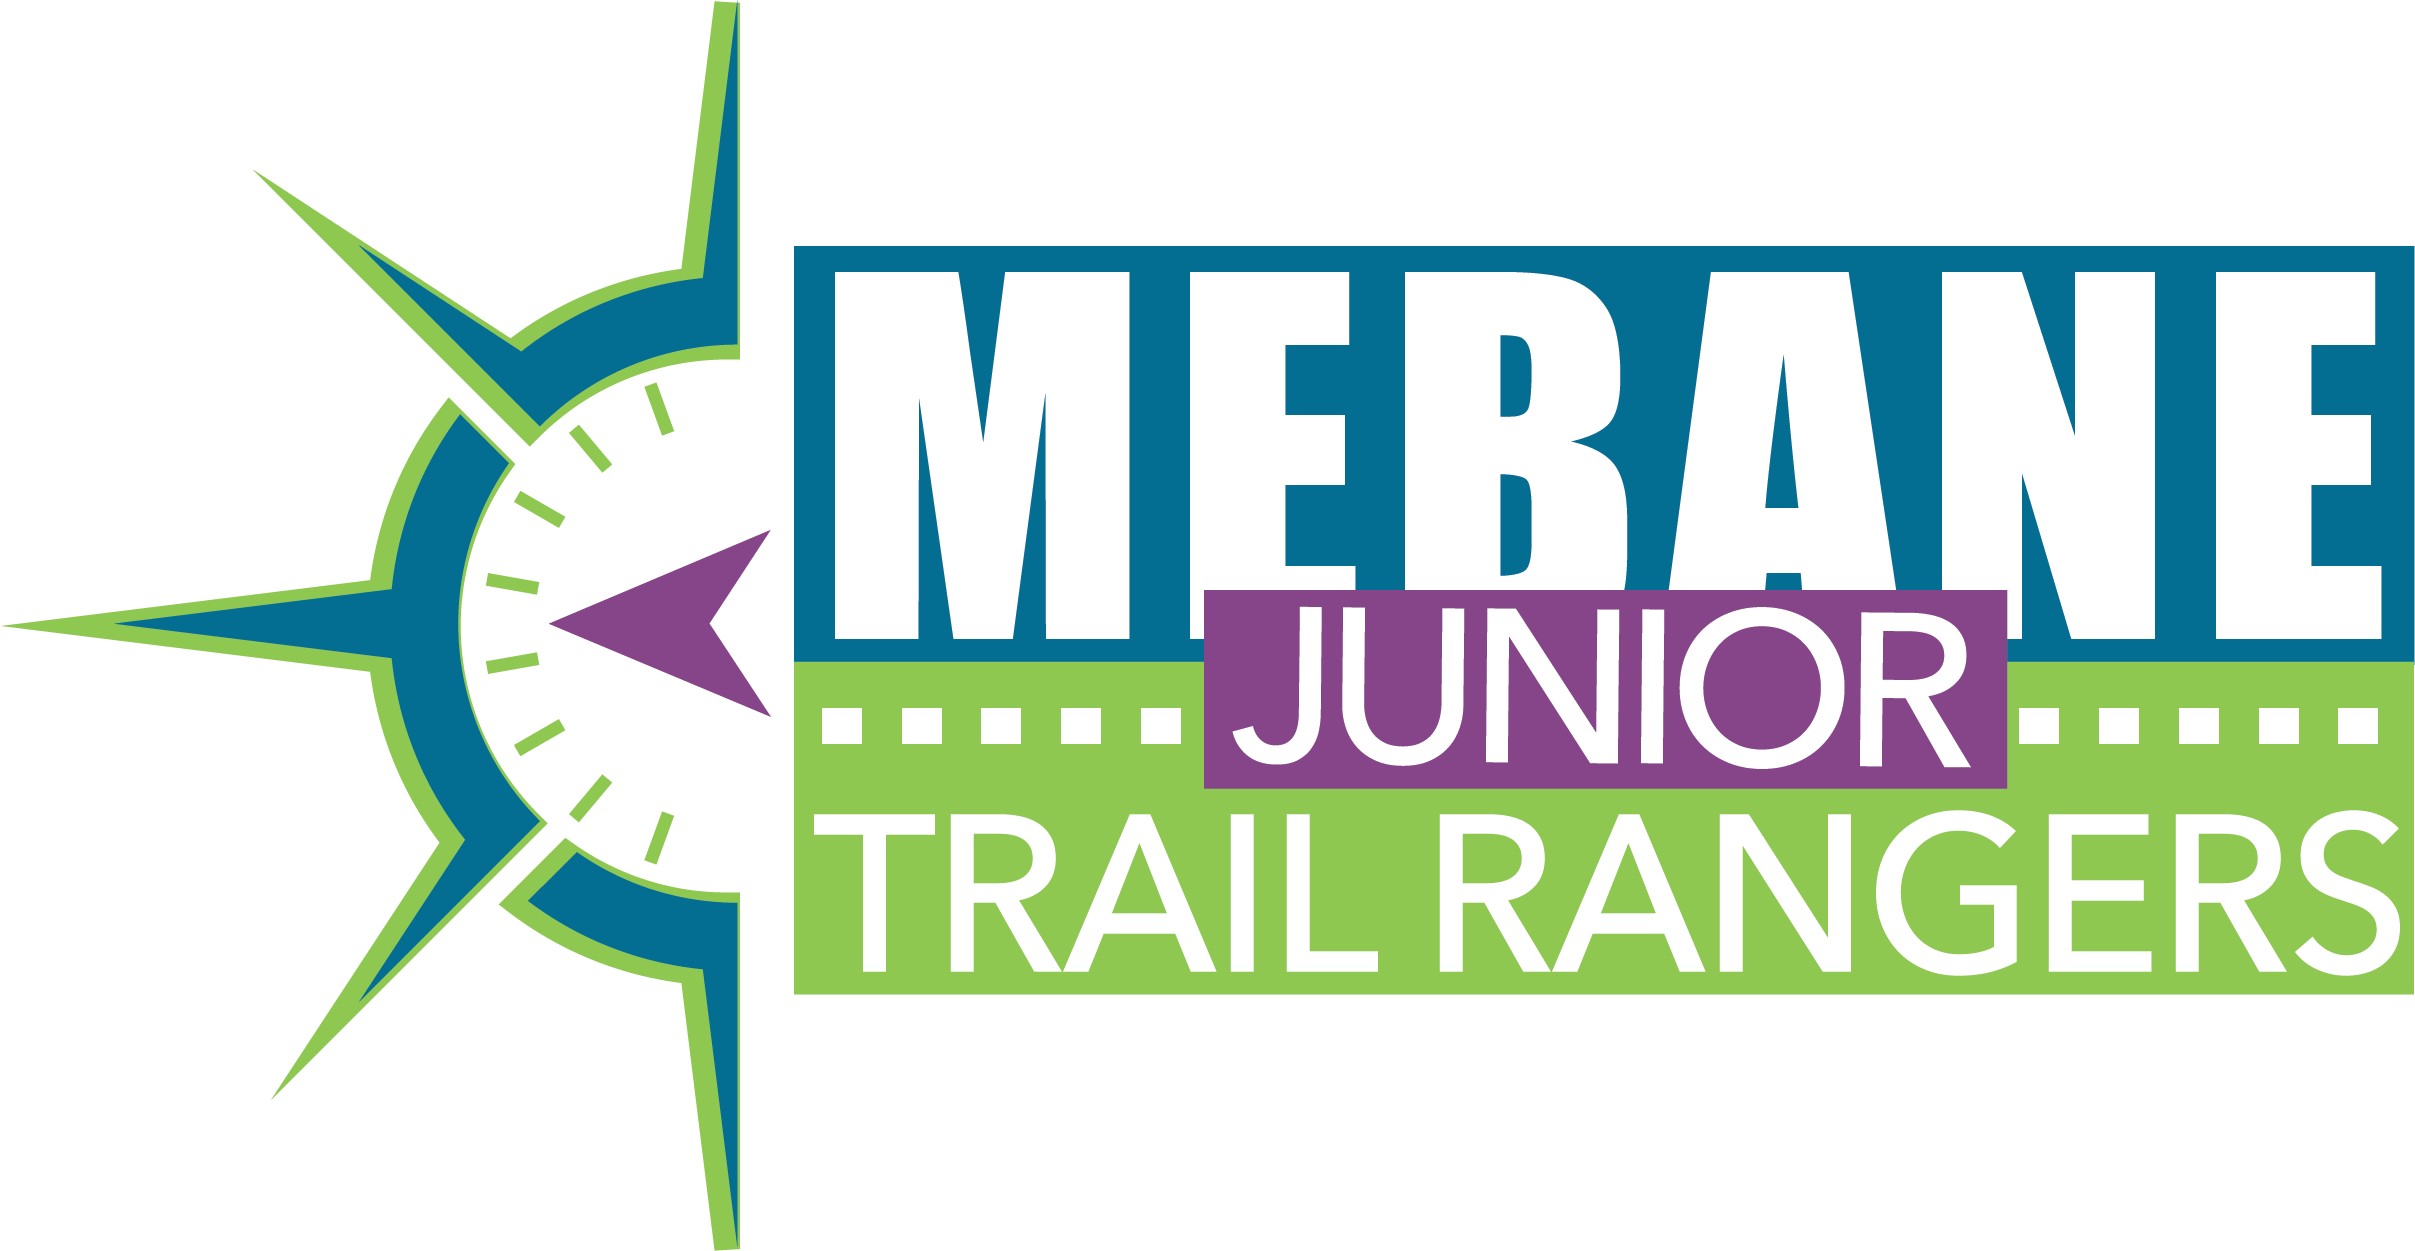 Junior Trail Rangers